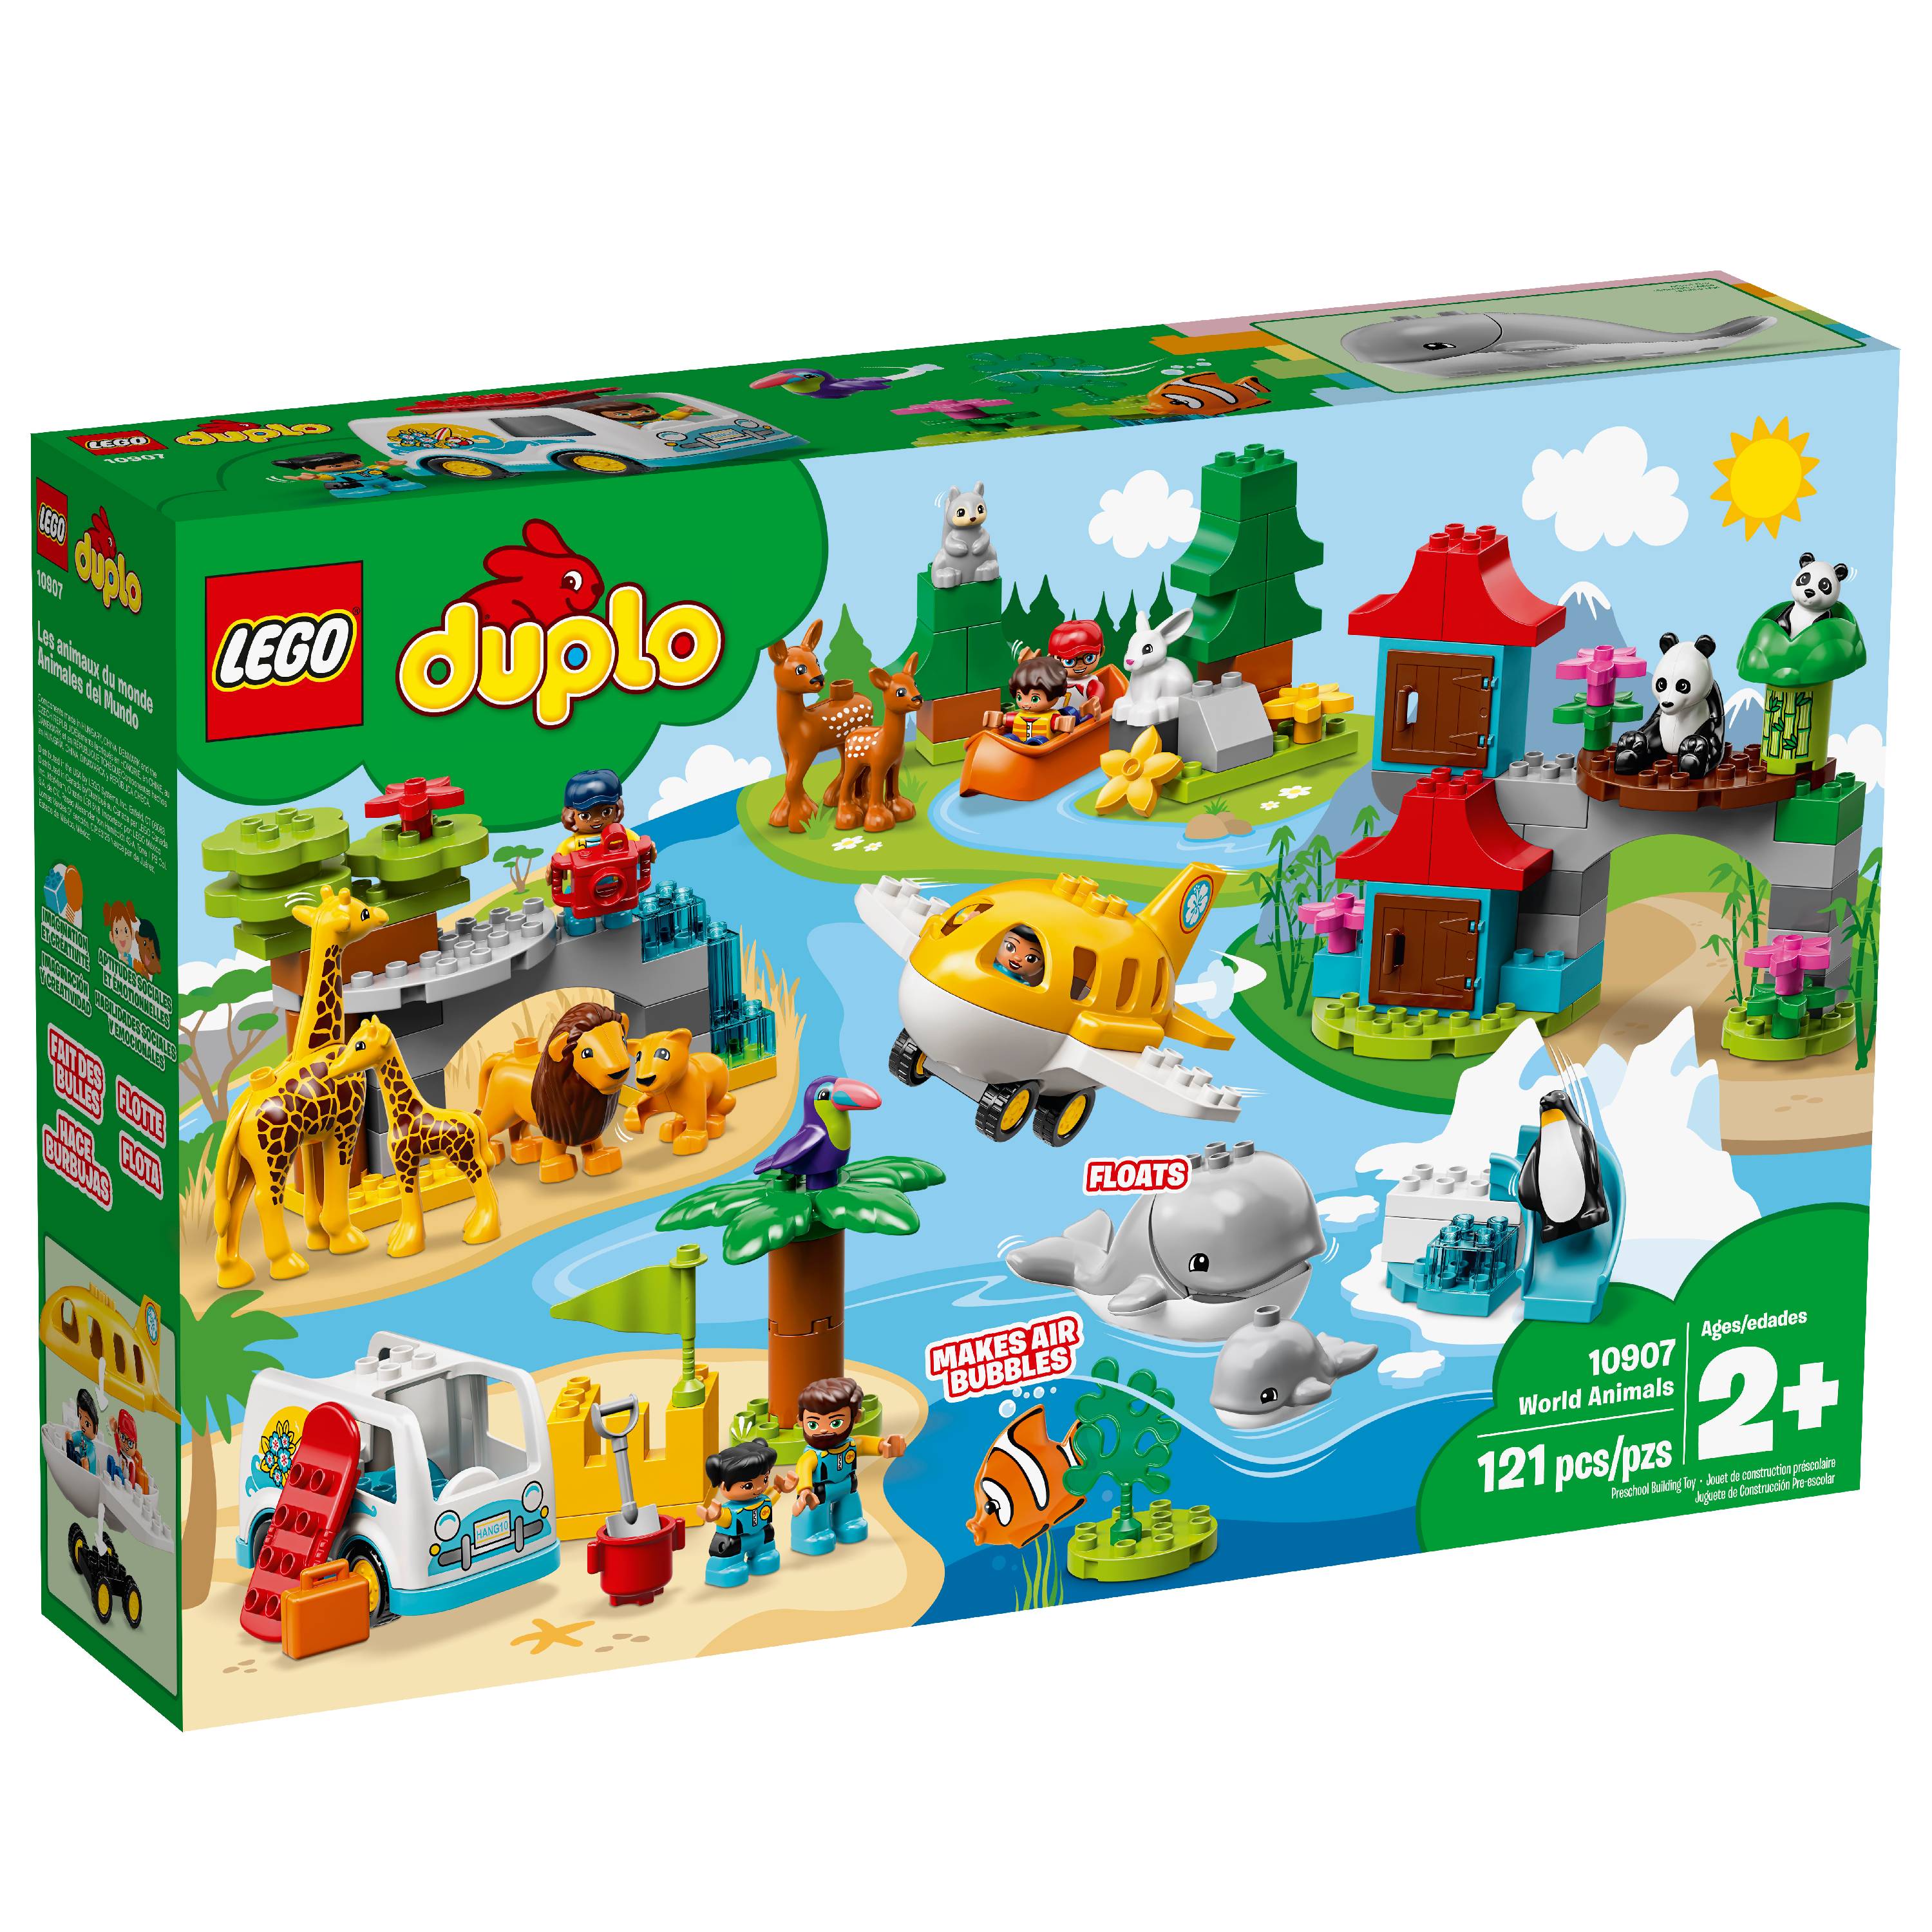 LEGO DUPLO Town World Animals 10907 Building Bricks (121 Pieces) - image 4 of 7